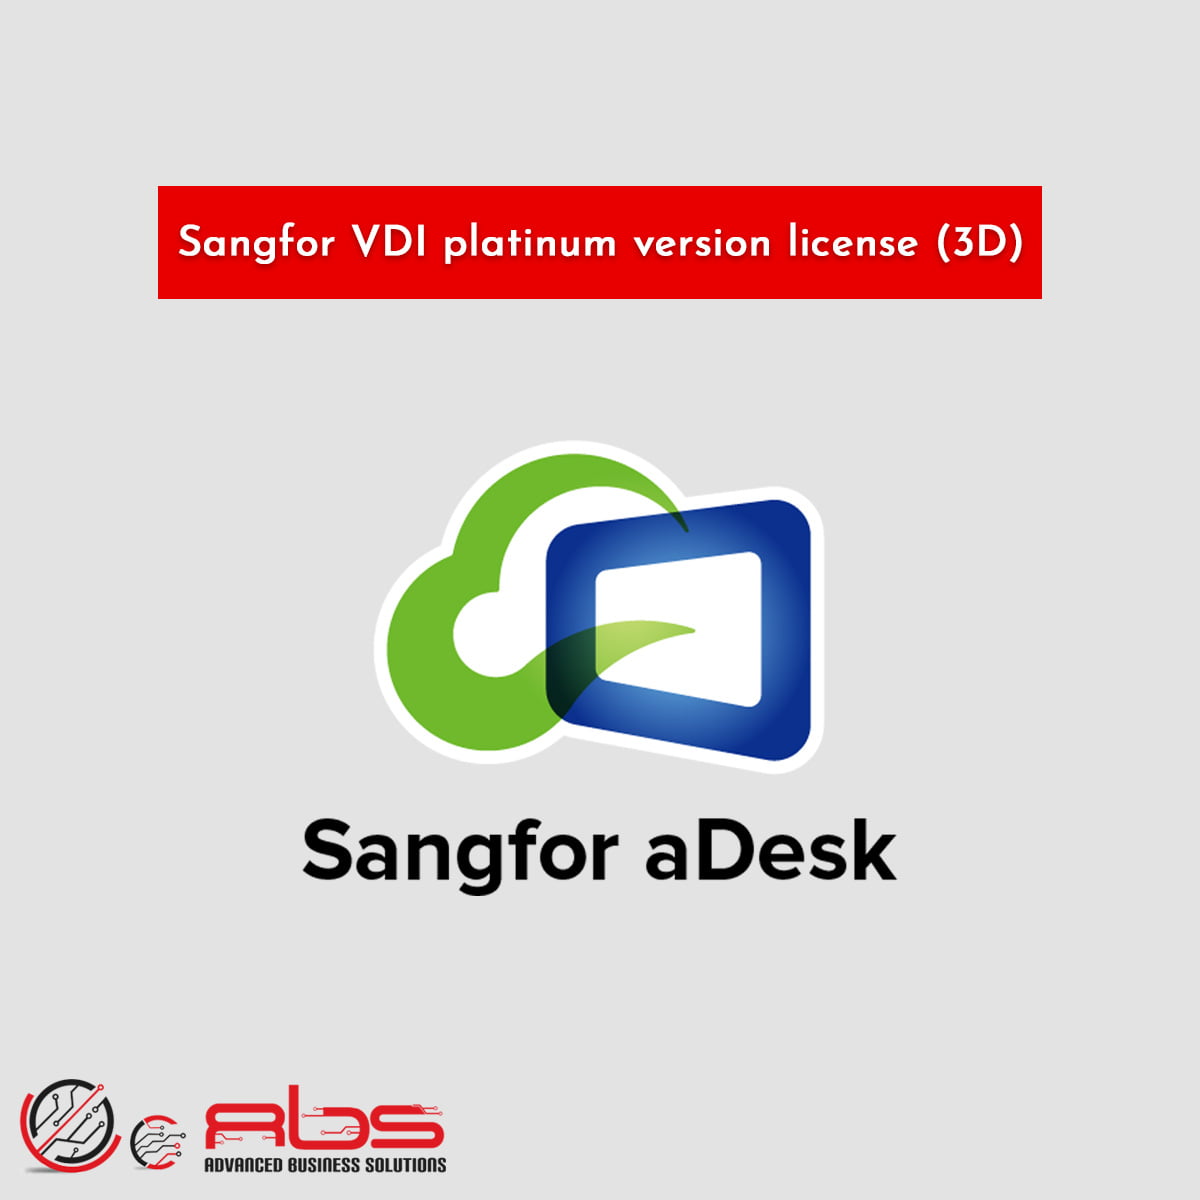 Sangfor VDI platinum version license (3D)